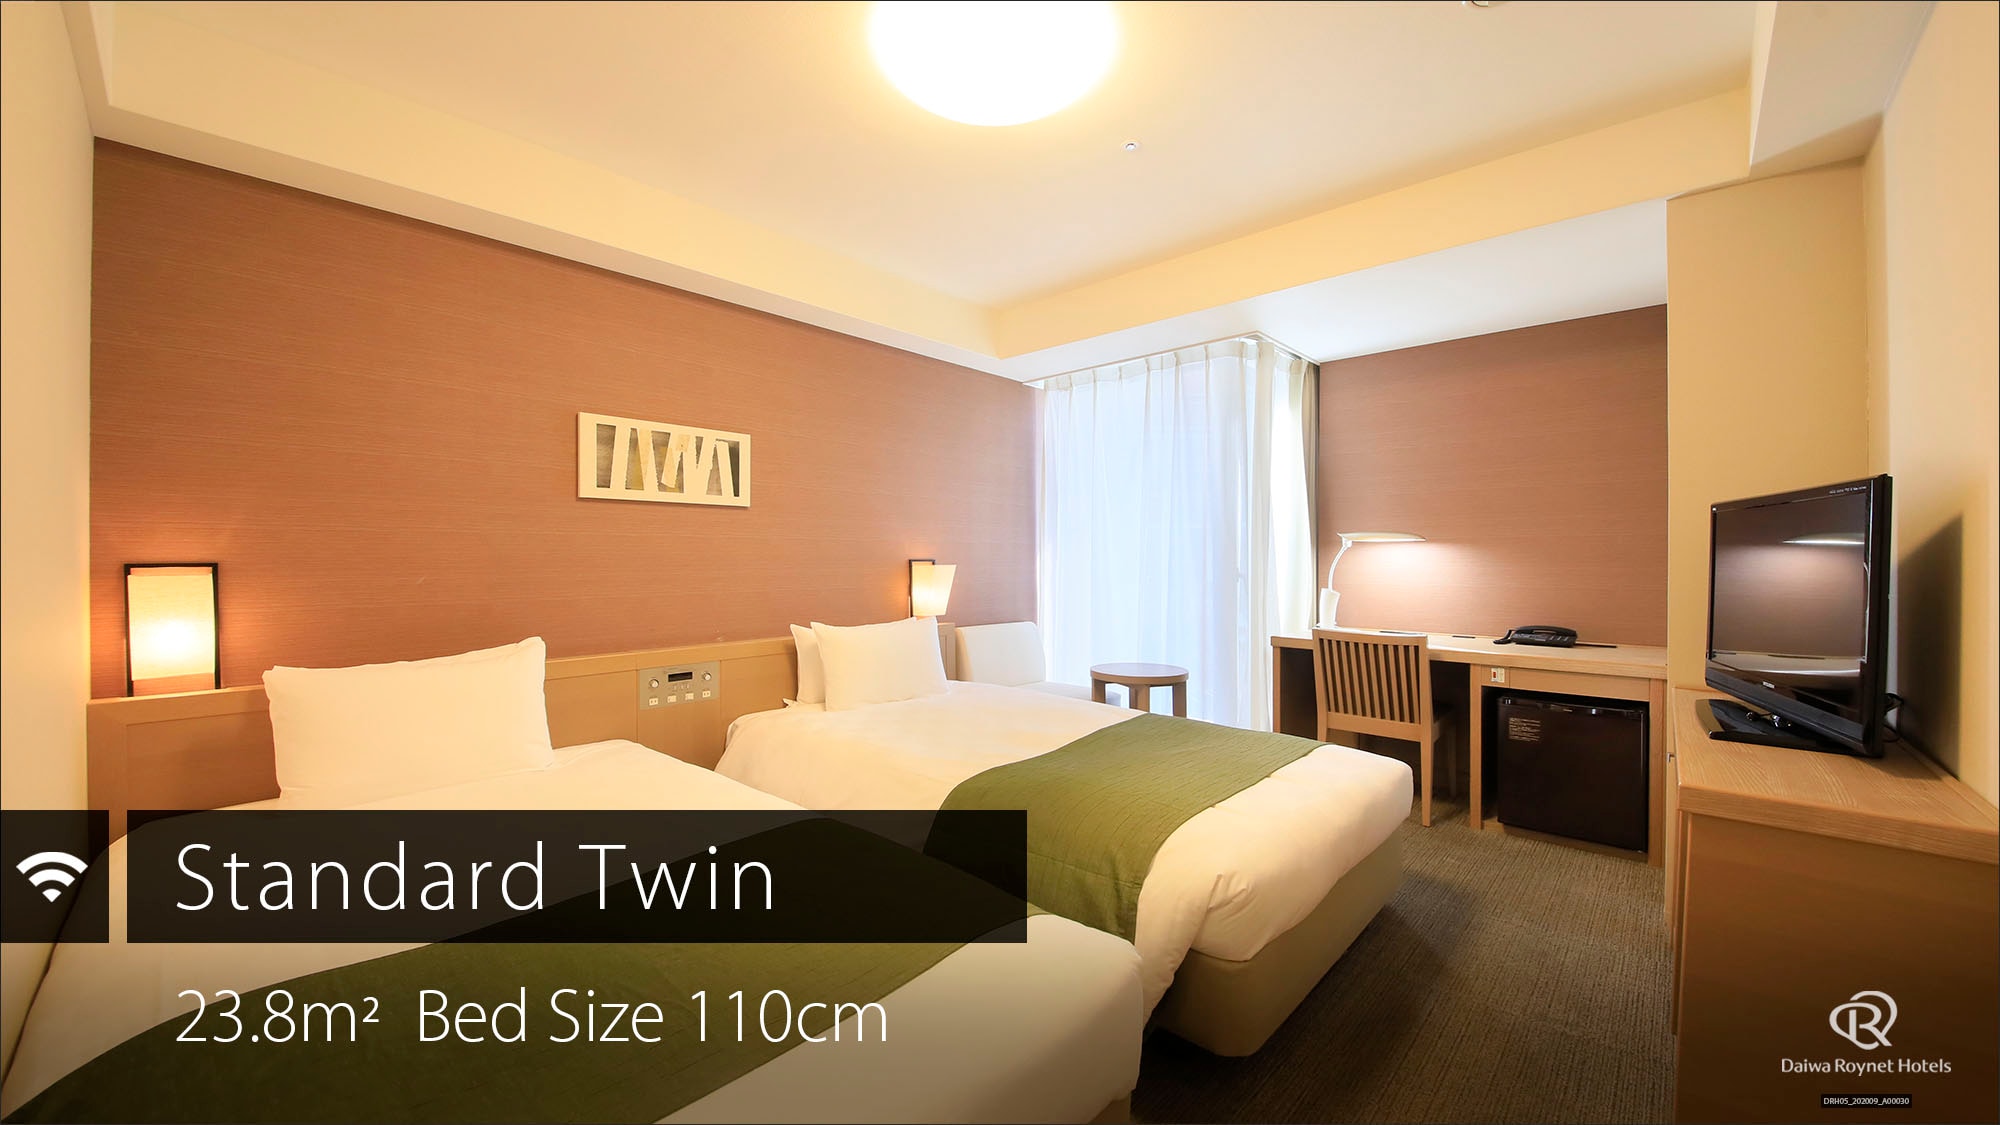 Standard twin room